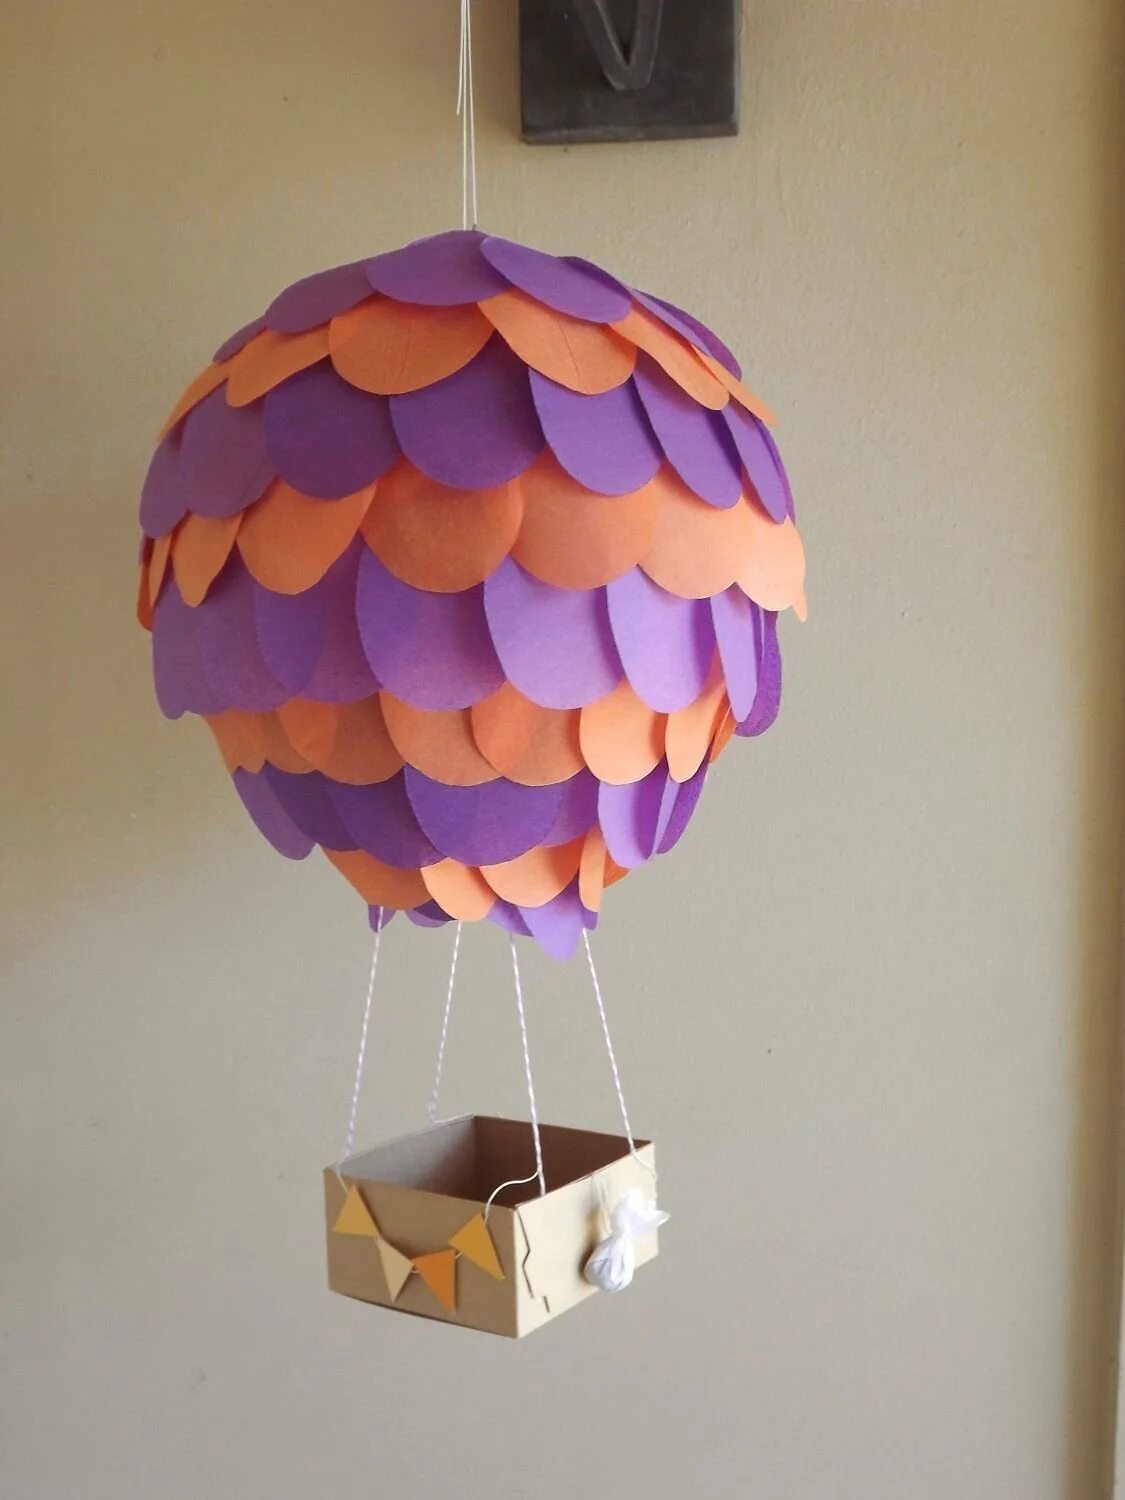 Воздушный шар технология. Объемный воздушный шар. Воздушный шар поделка. Поделка воздушный шар из бумаги. Поделка воздушный шар с корзиной.